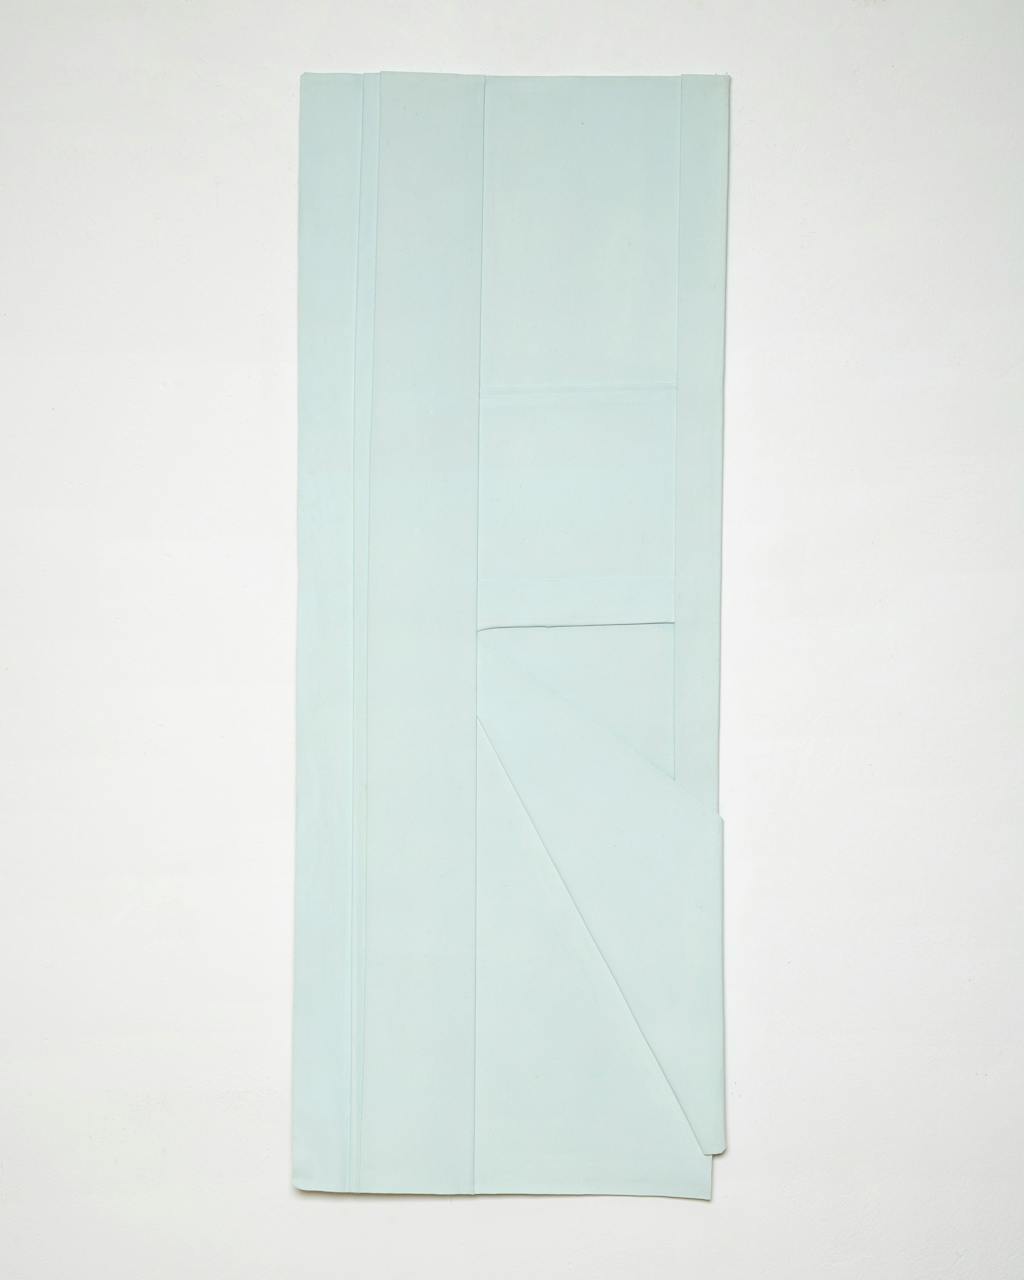 Untitled (#blue door), 2020, oil, gesso and thread on canvas, 130 x 48.5 cm - © Paris Internationale